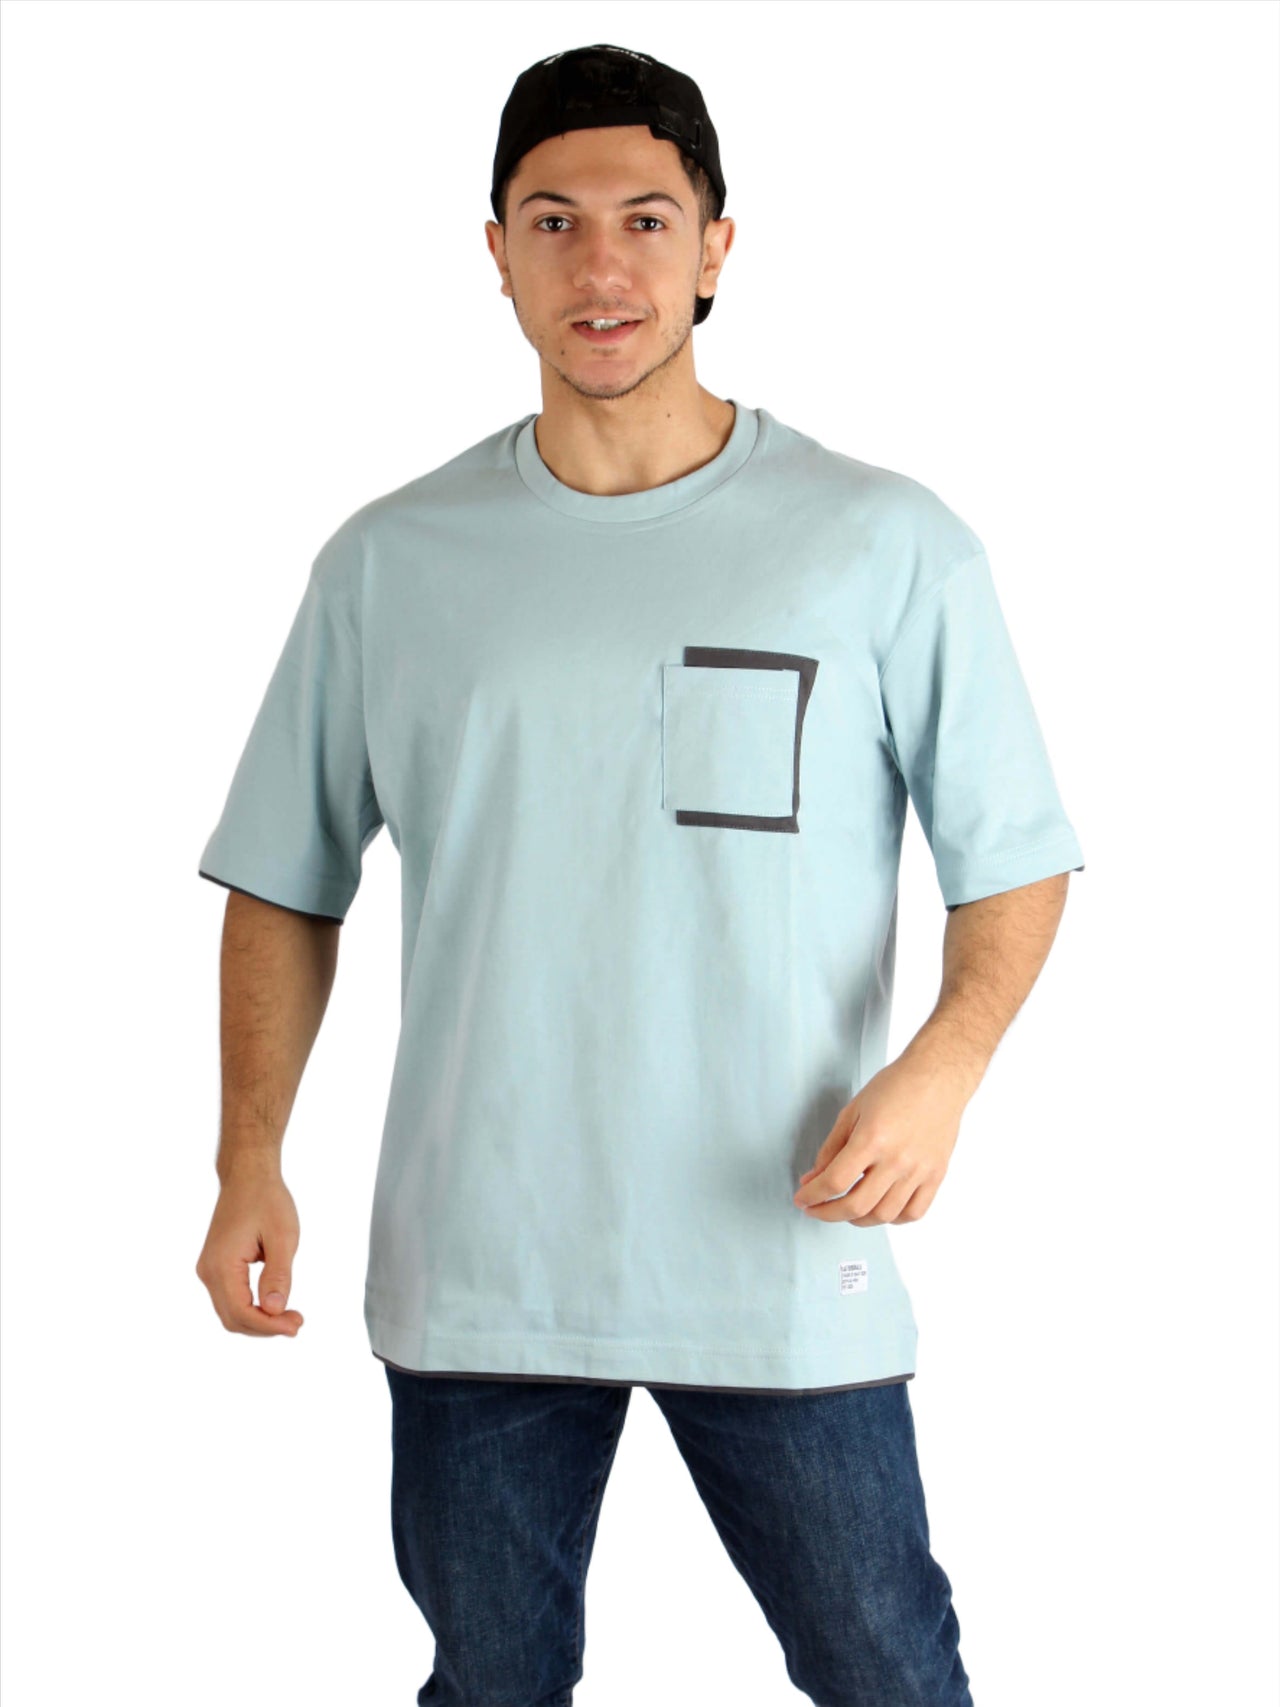 Oversized Double-Tip Pocket T-shirt - Blue Mint